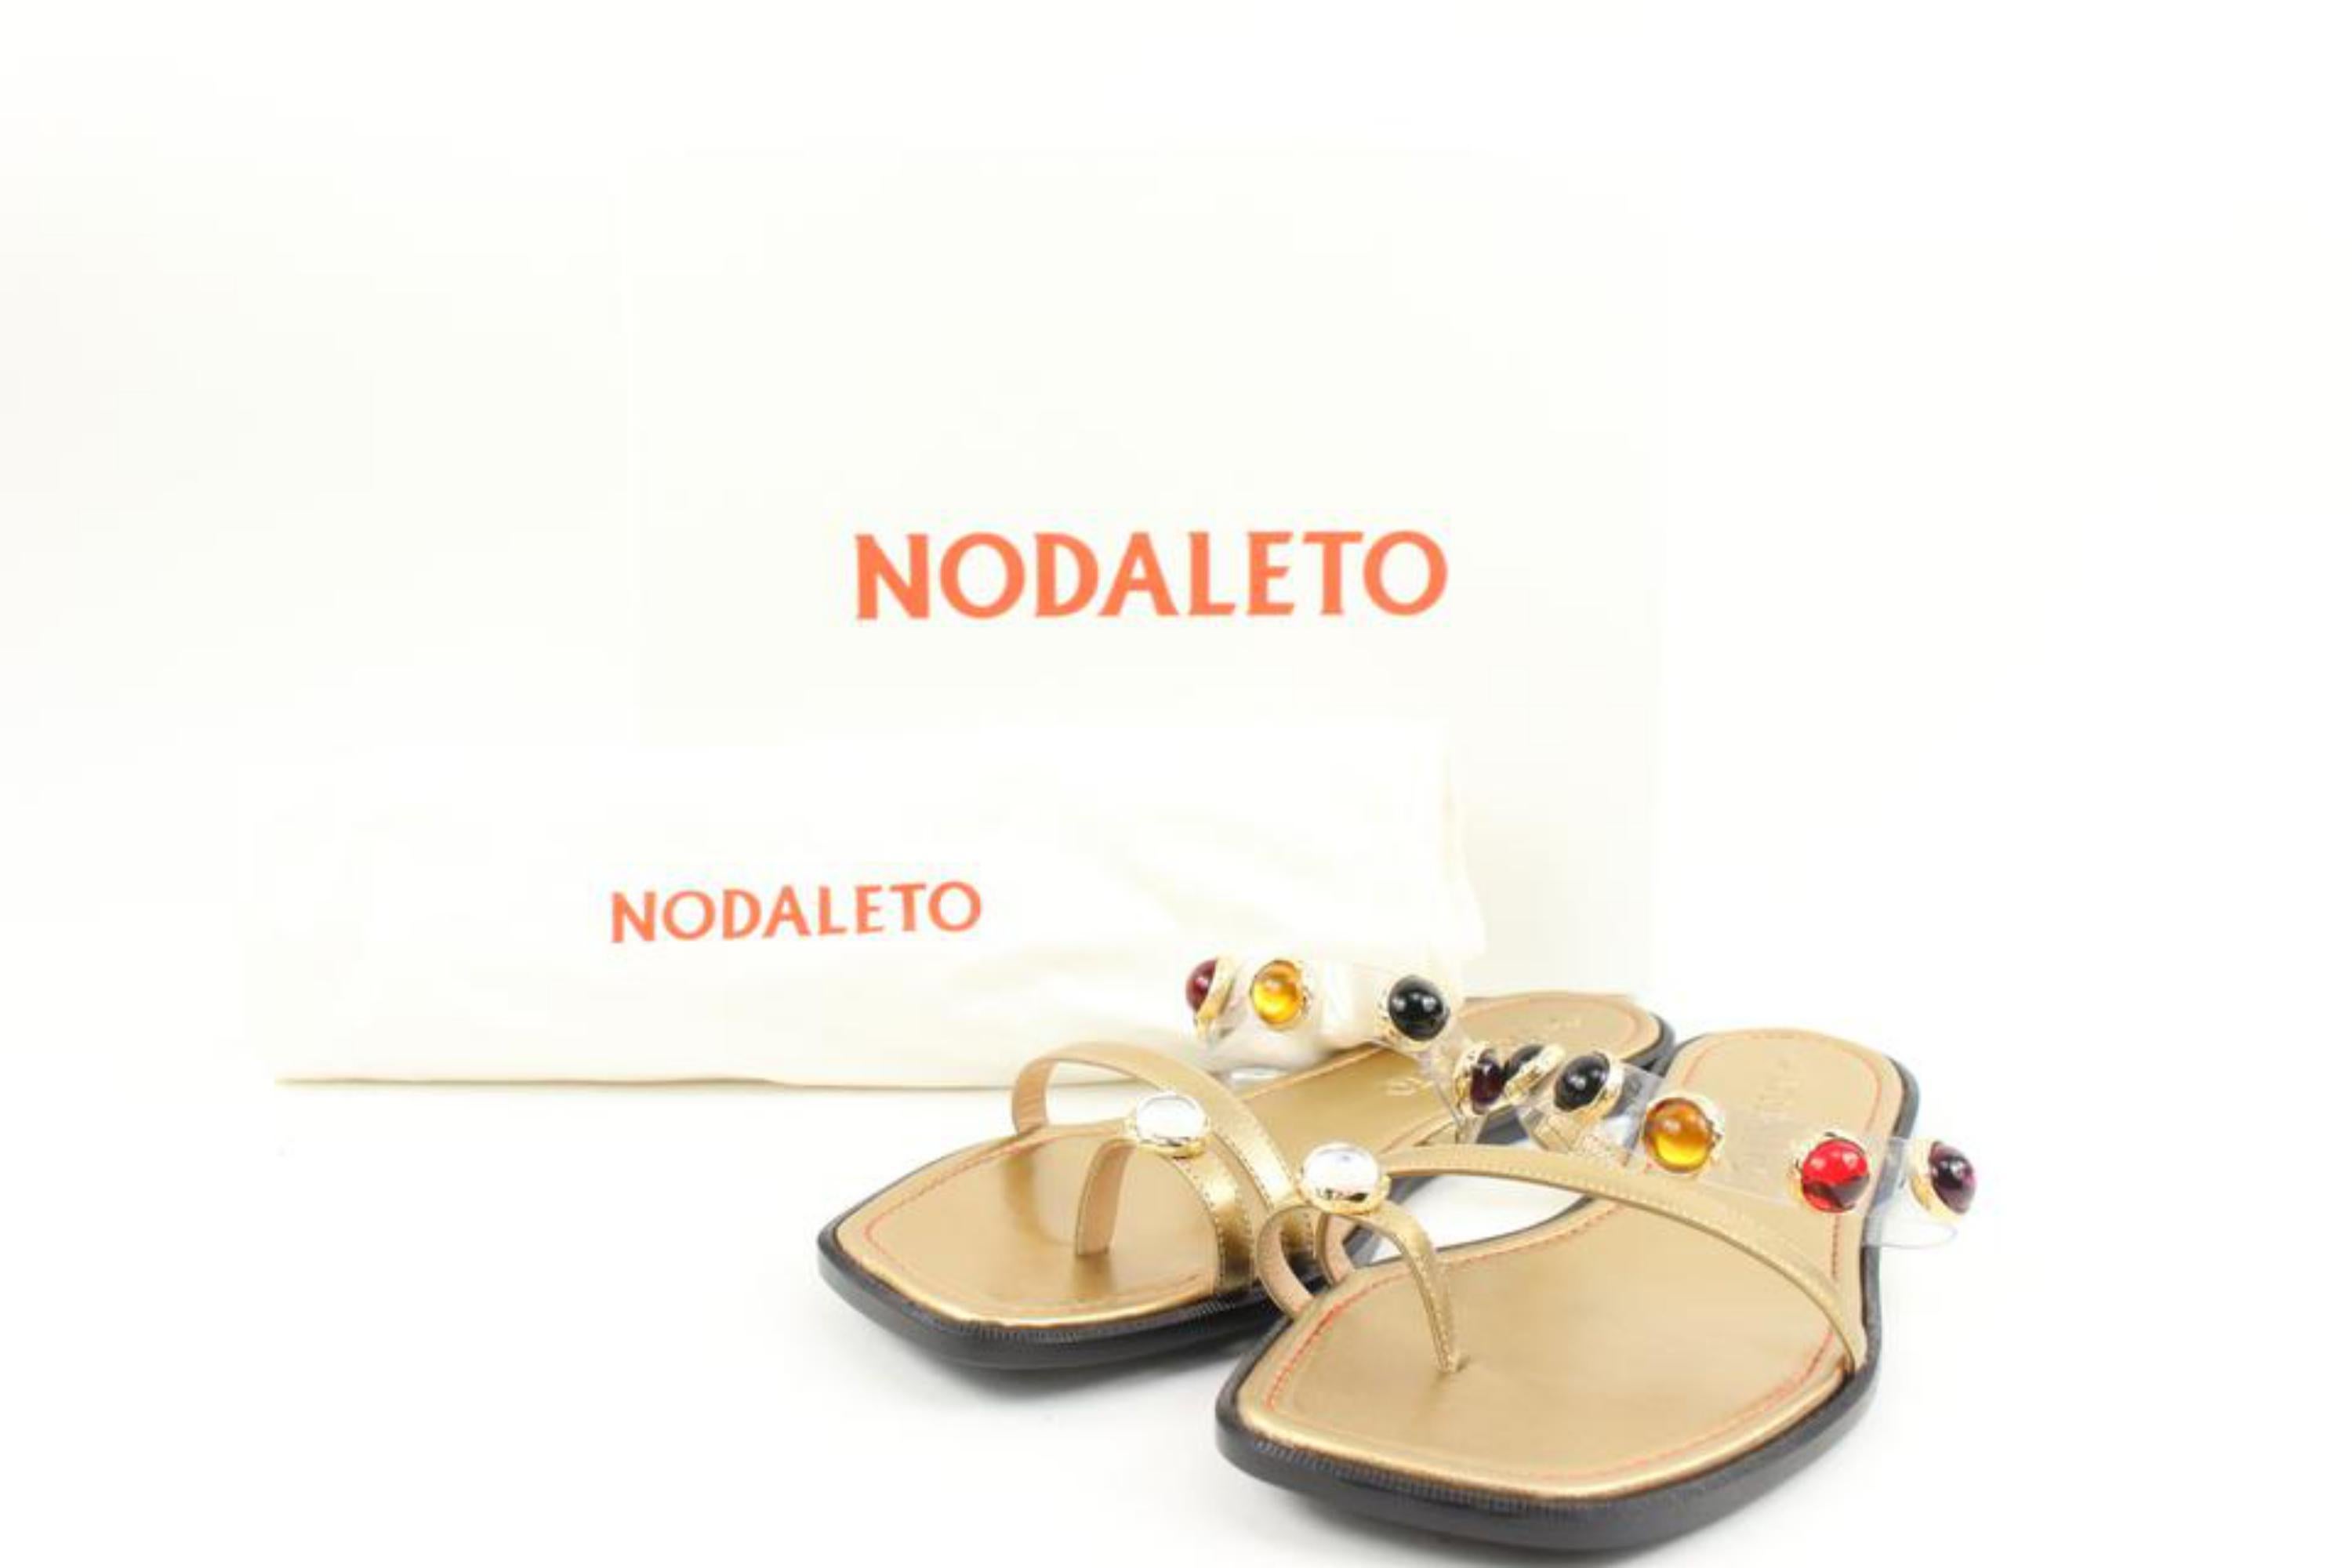 Nodaleto Sz 38 $735 Bulla Salem Flat Jeweled Gold Sandals 39n31s 40n321s
Made In: Venice
Measurements: Length:  10